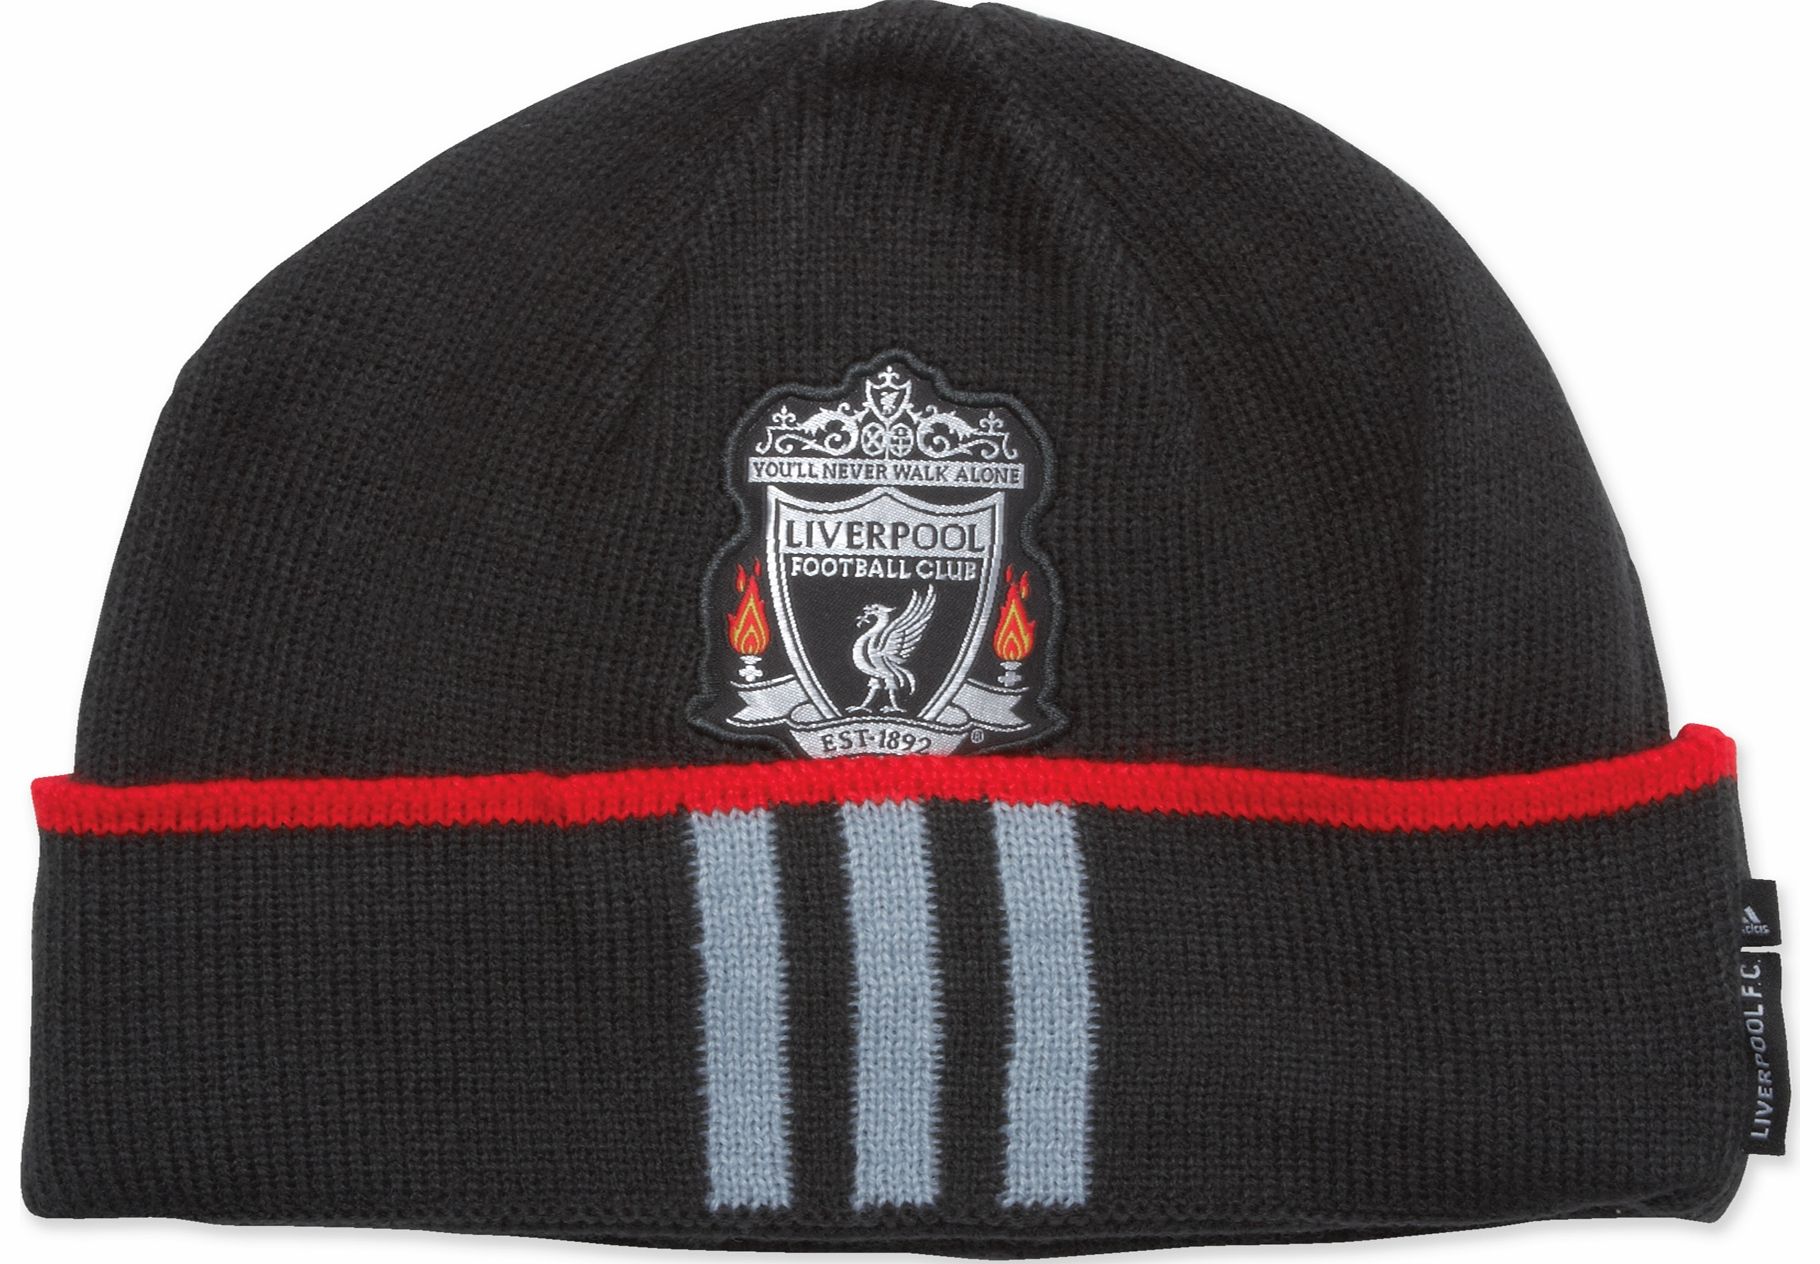 Training Wear Adidas 2011-12 Liverpool Adidas Woolie Hat (Black)